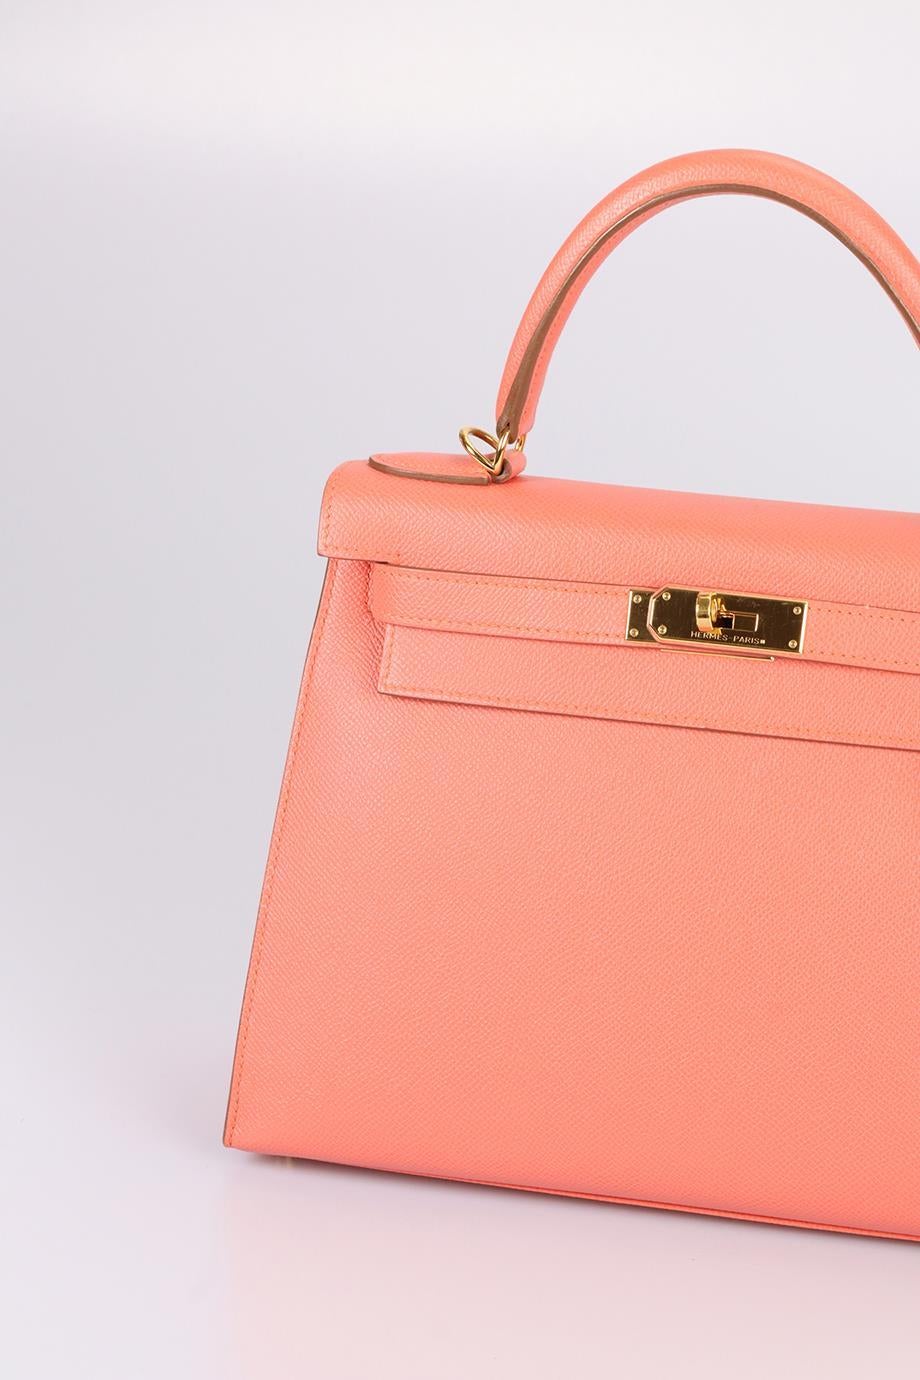 Hermès 2014 Kelly Ii Sellier 28 Cm Epsom Leather Bag For Sale 1